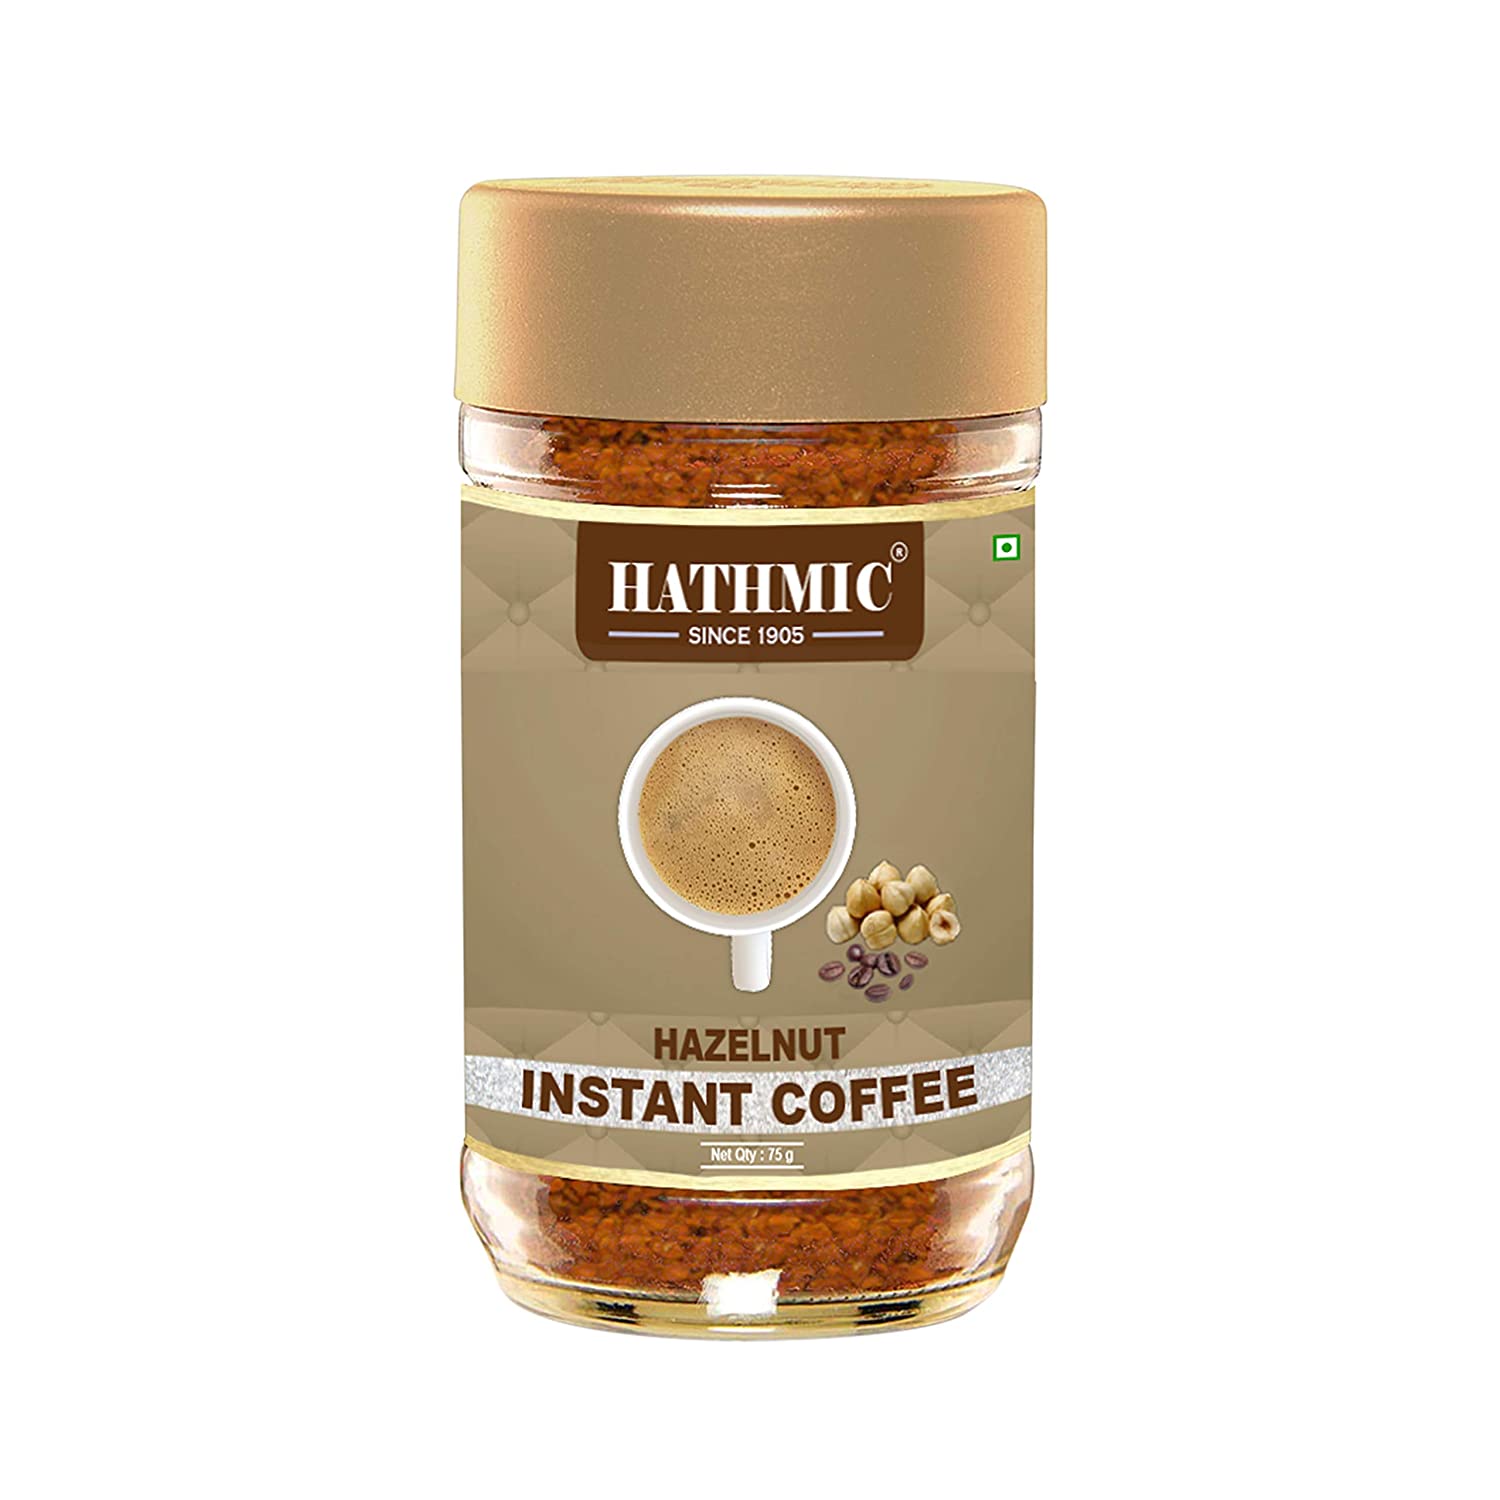 Hathmic Hazelnut Instant Coffee Image